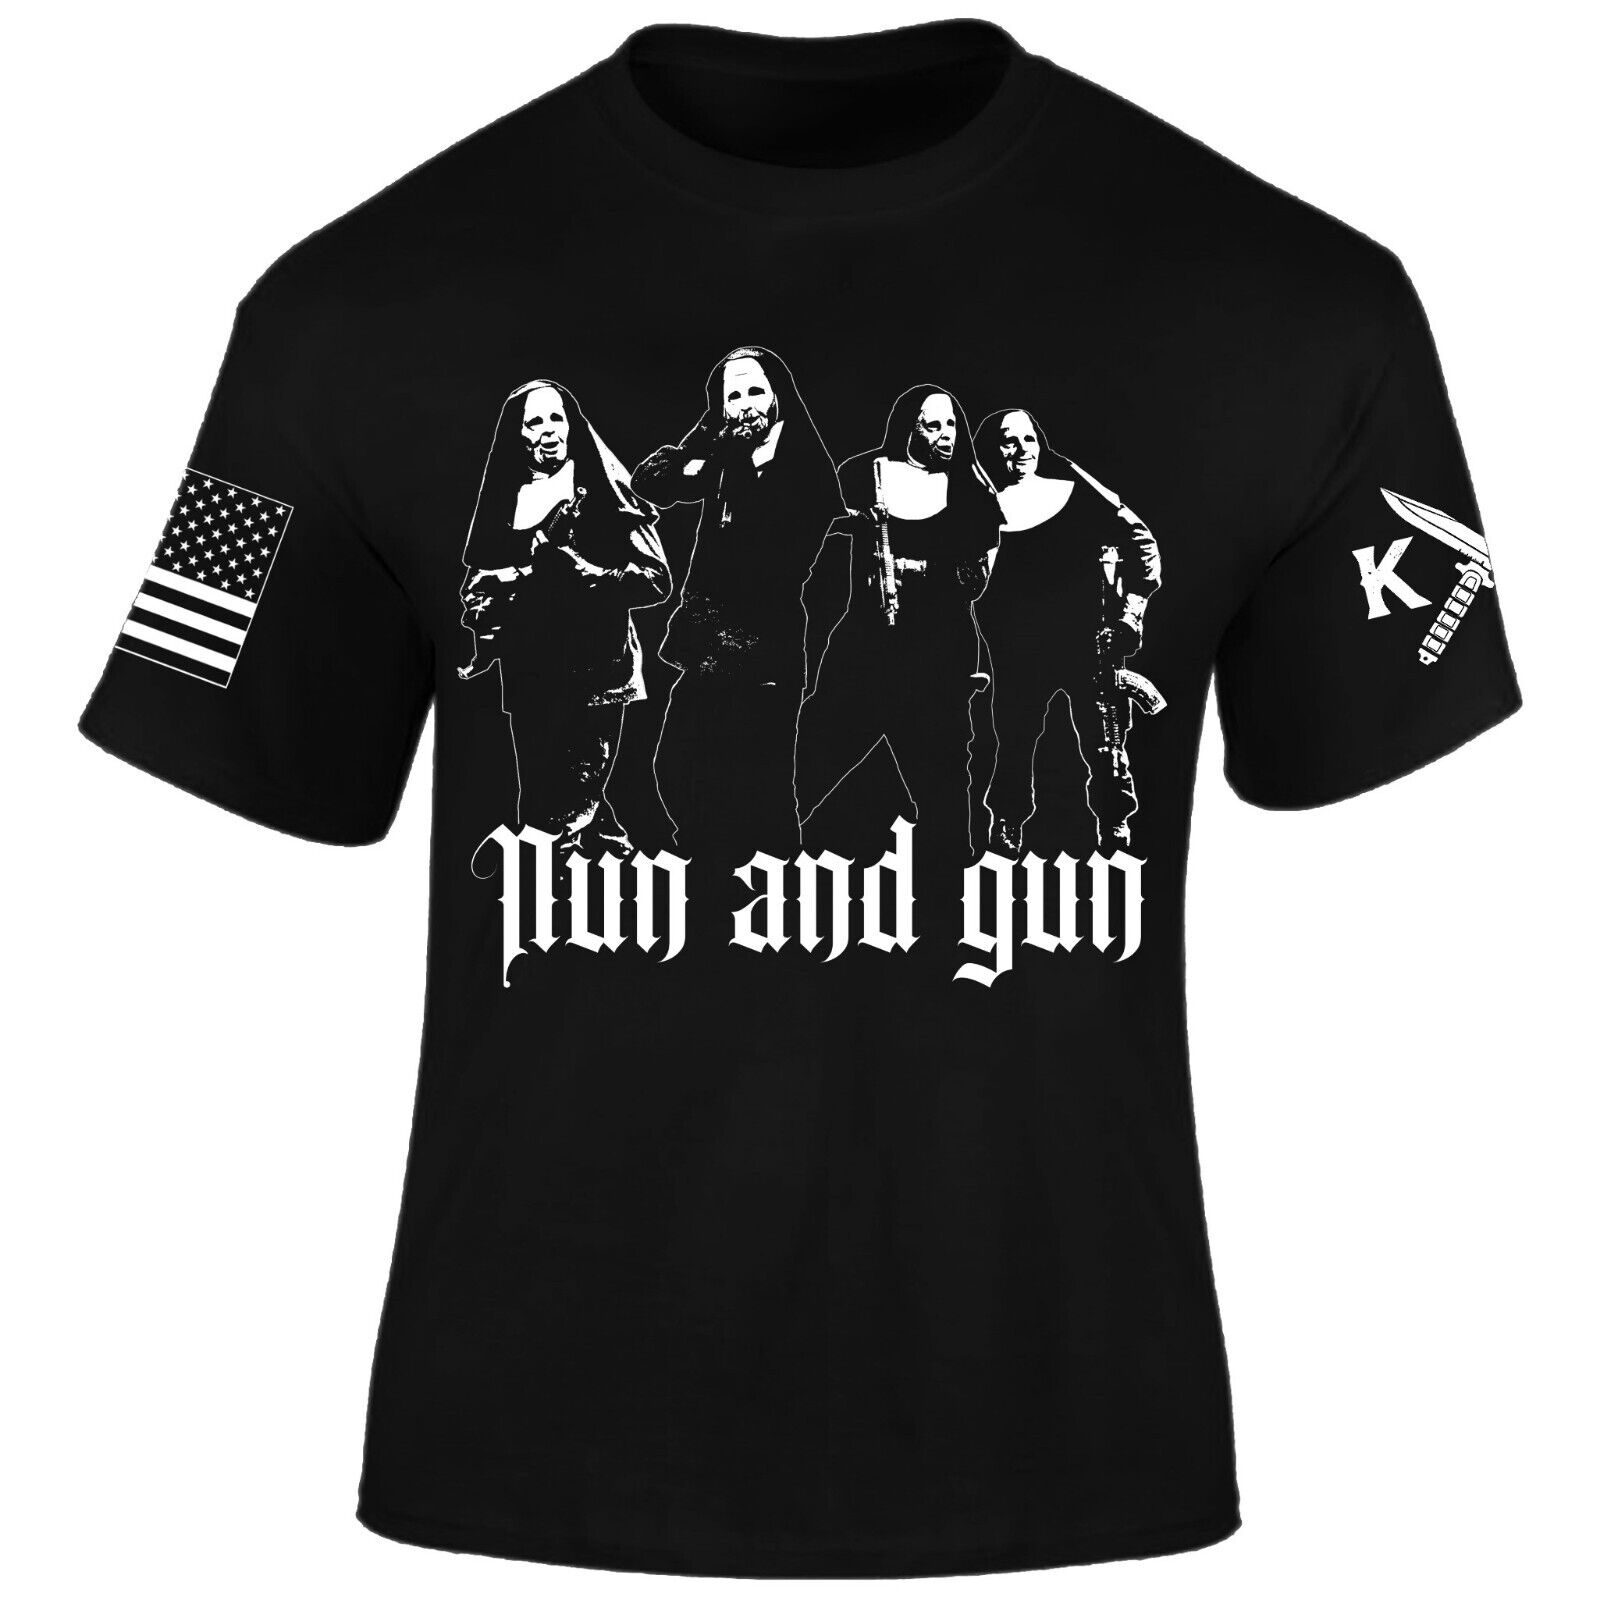 Nun and Gun T-Shirt I Patriot I Veteran I The Town I Military I America